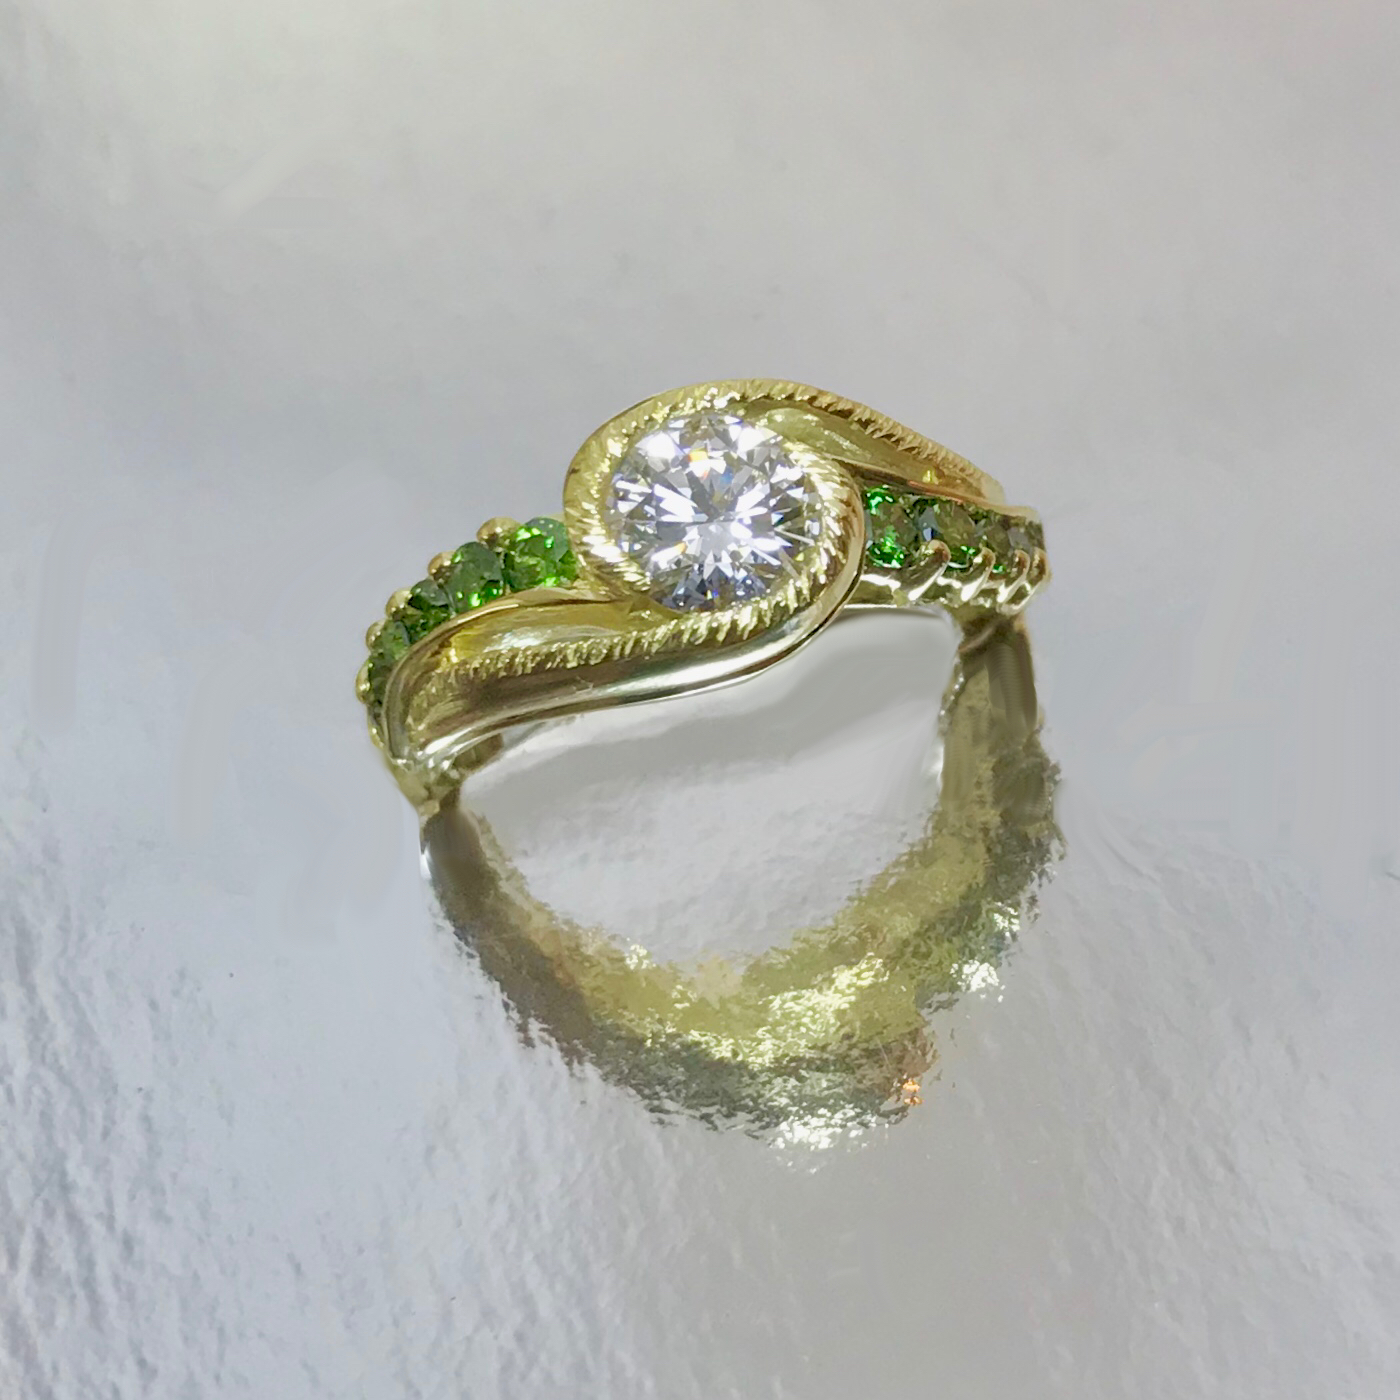 18 Kt Green Gold Custom Designed Black Cherry Leaf 
Diamond Engagement Style Ring Set With Green Diamonds